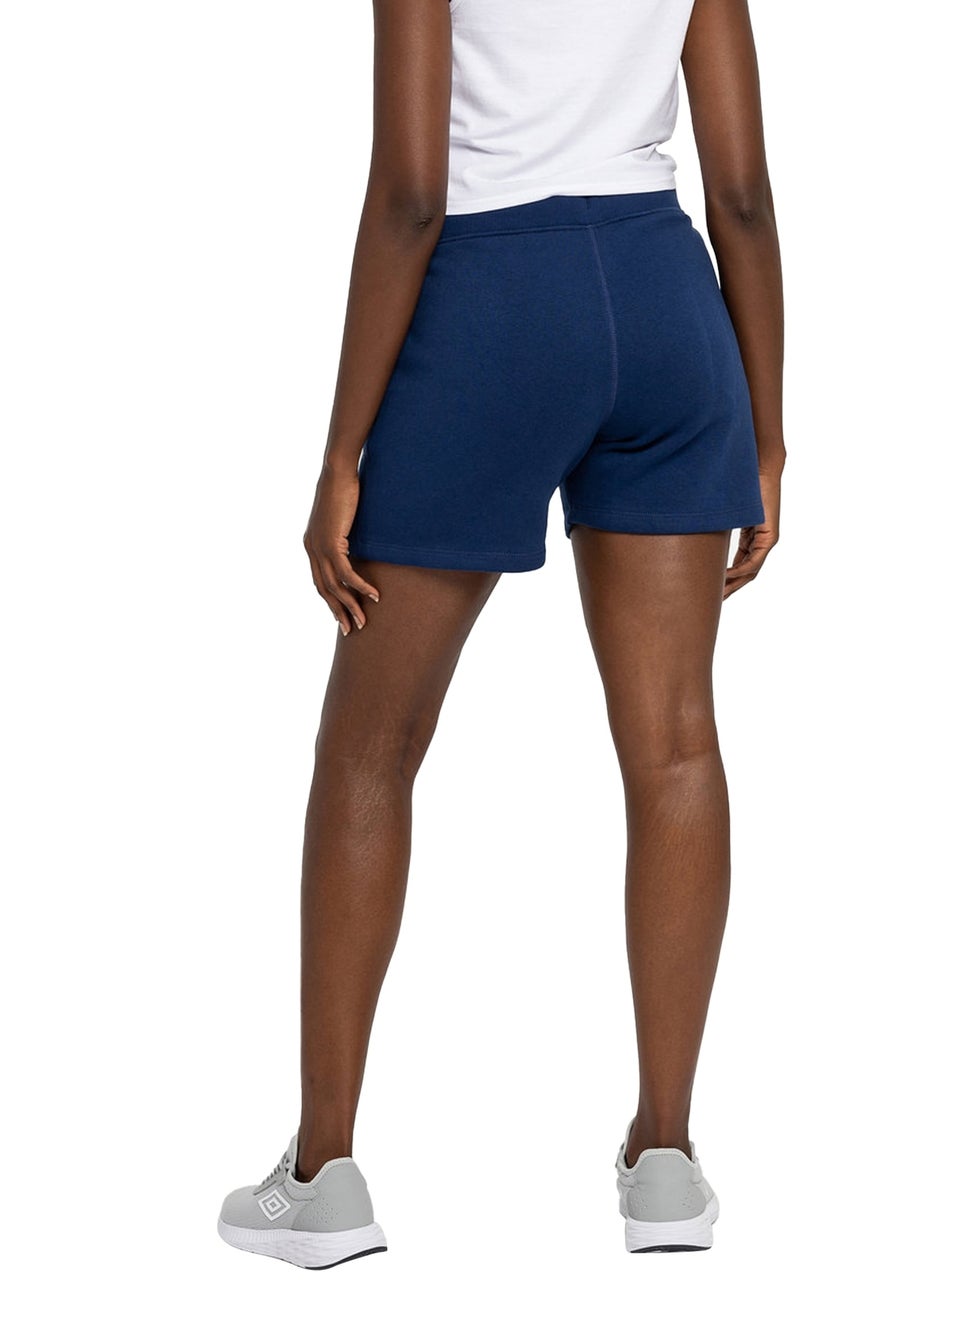 Umbro Navy Pro Elite Fleece Shorts